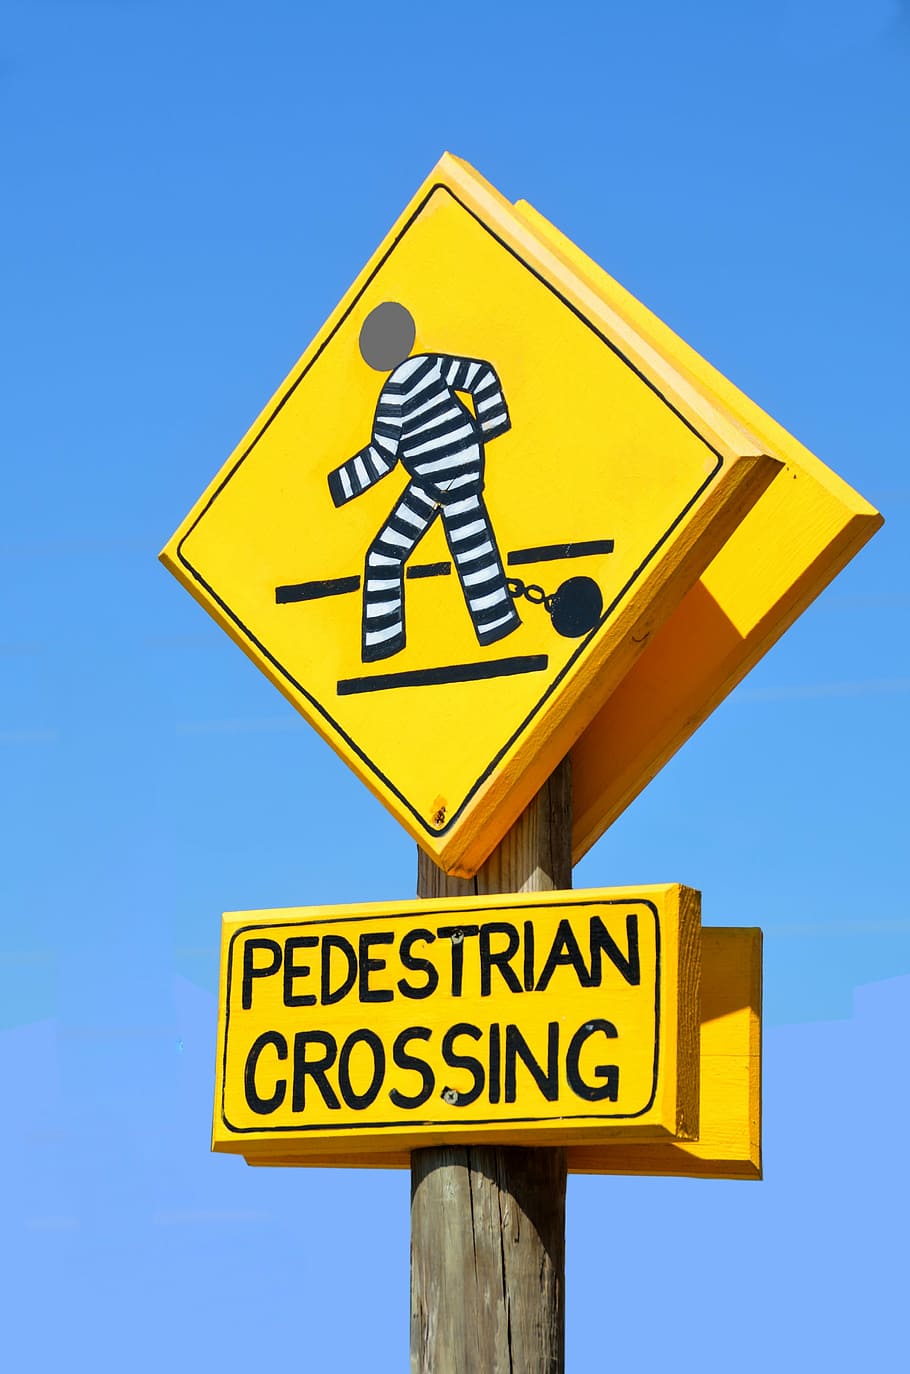 歩行者横断歩道の標識, 屋外, シンボル, 警告, 安全性, 道路, 標識, 歩行者, 横断歩道, 通り